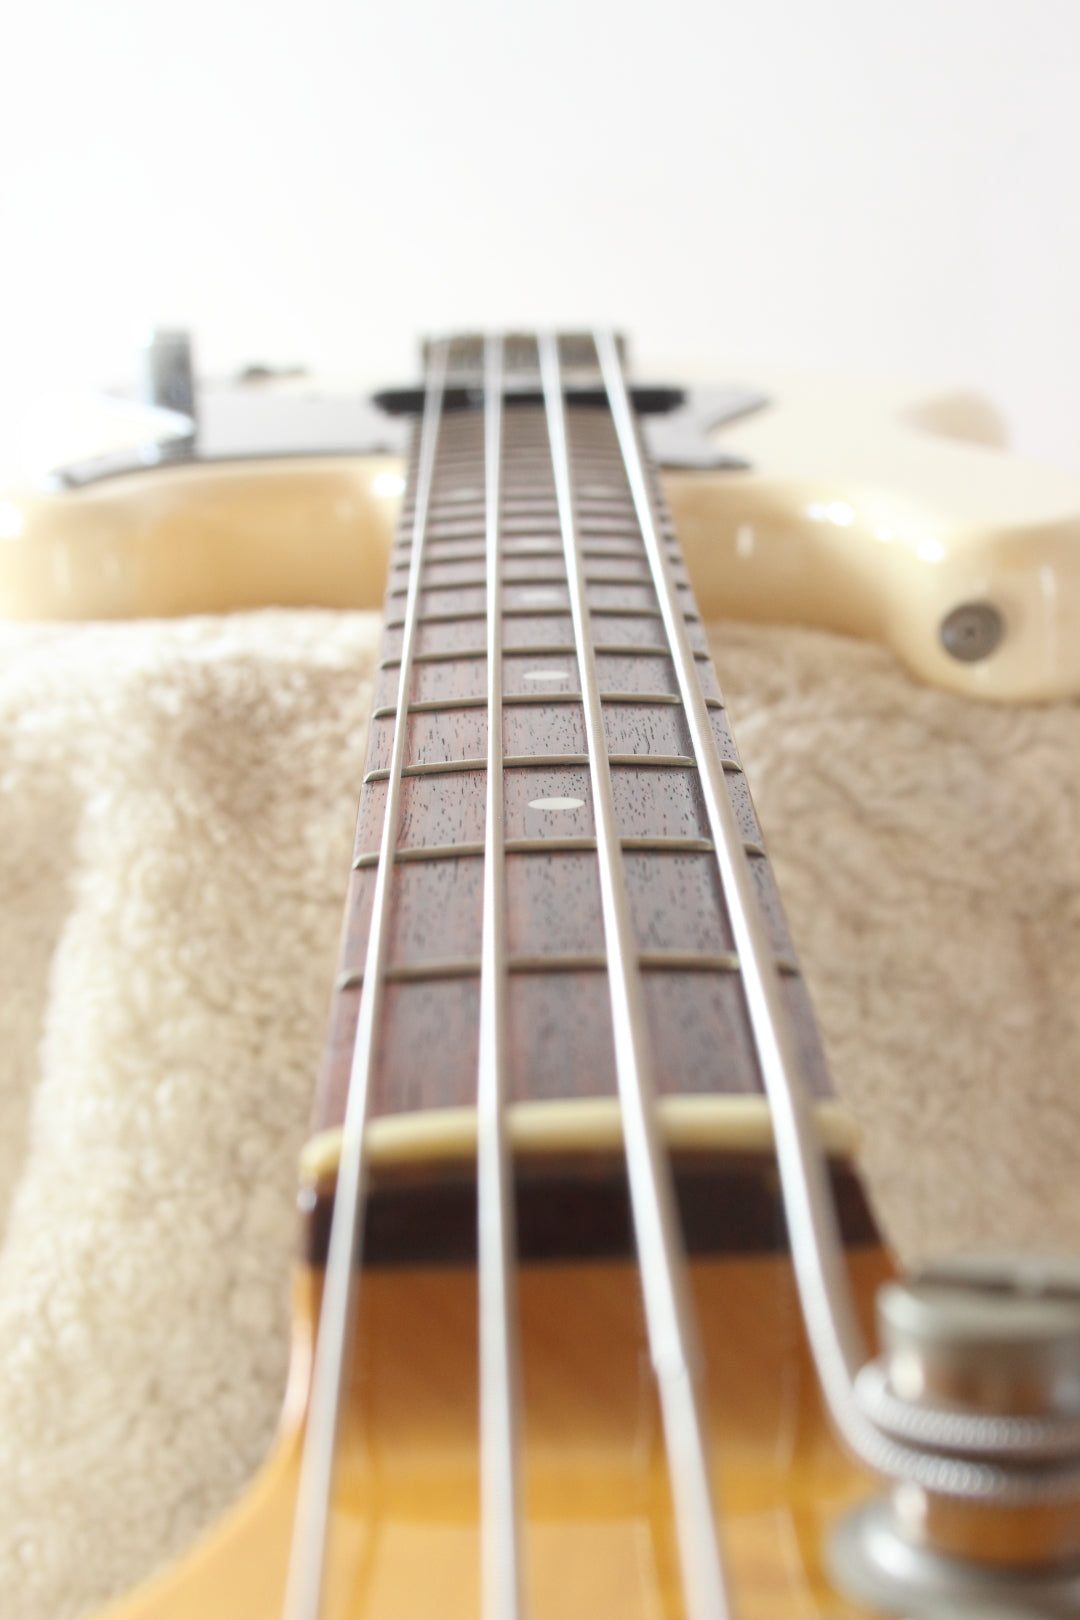 Fender Japan '70 Reissue Precision Bass PB70-70US Olympic White 1999-02